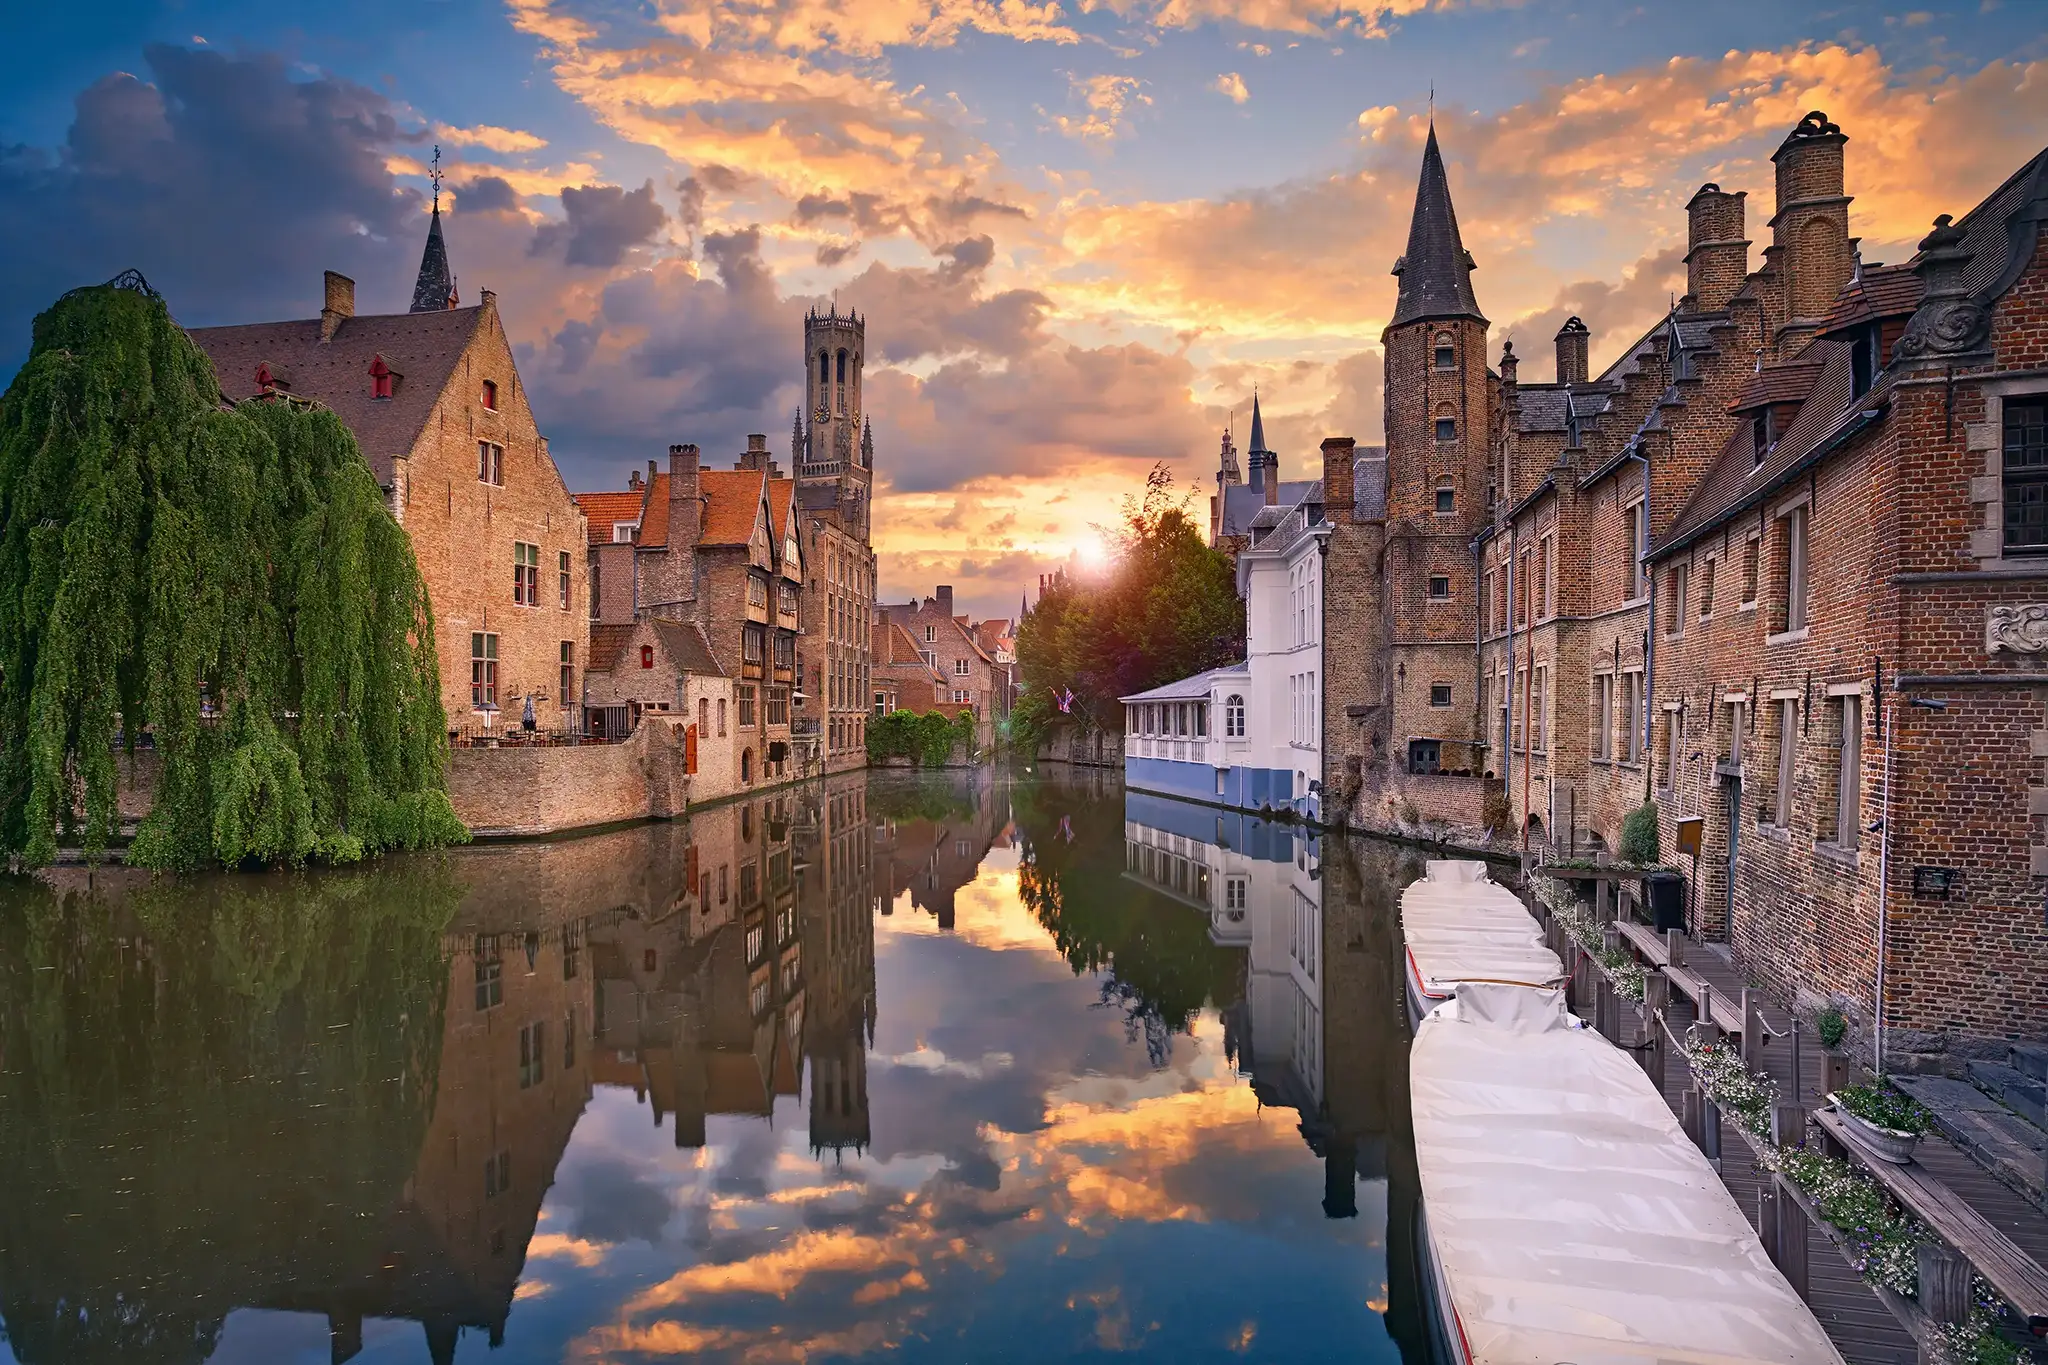 Image of Bruges, Belgium during dramatic sunset.